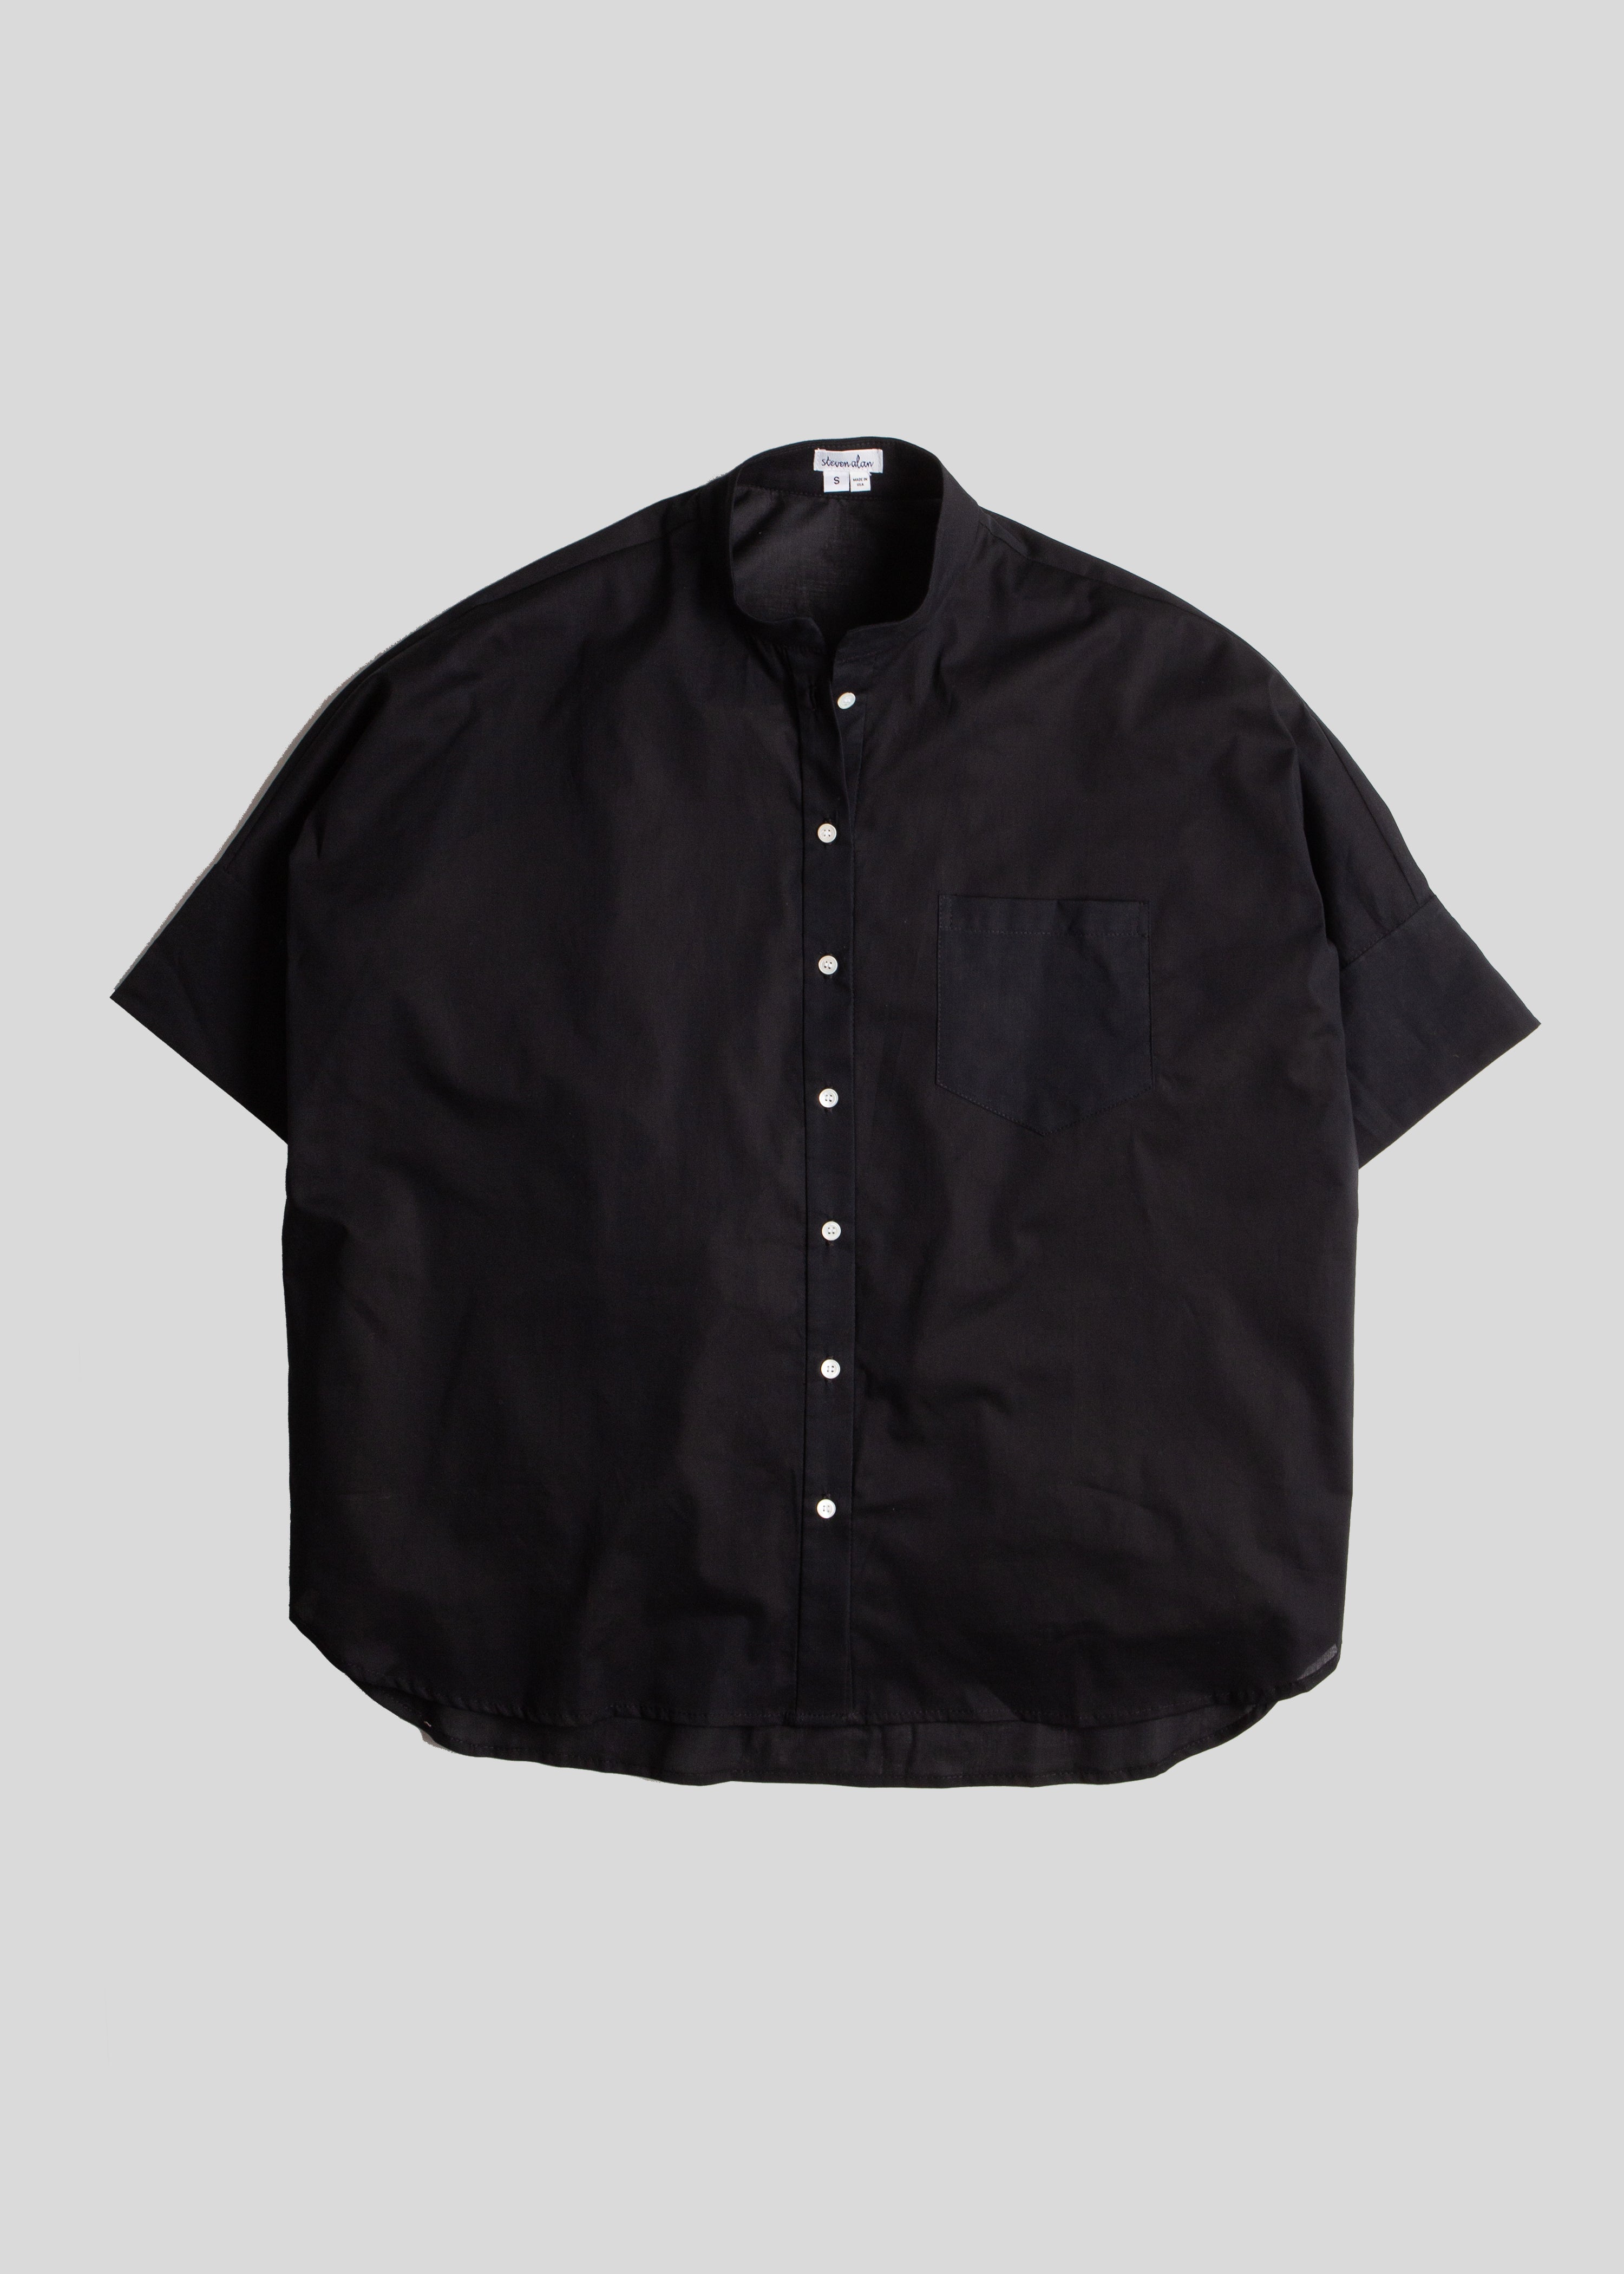 Image of Oversized Stand Collar Shirt, Black Batiste